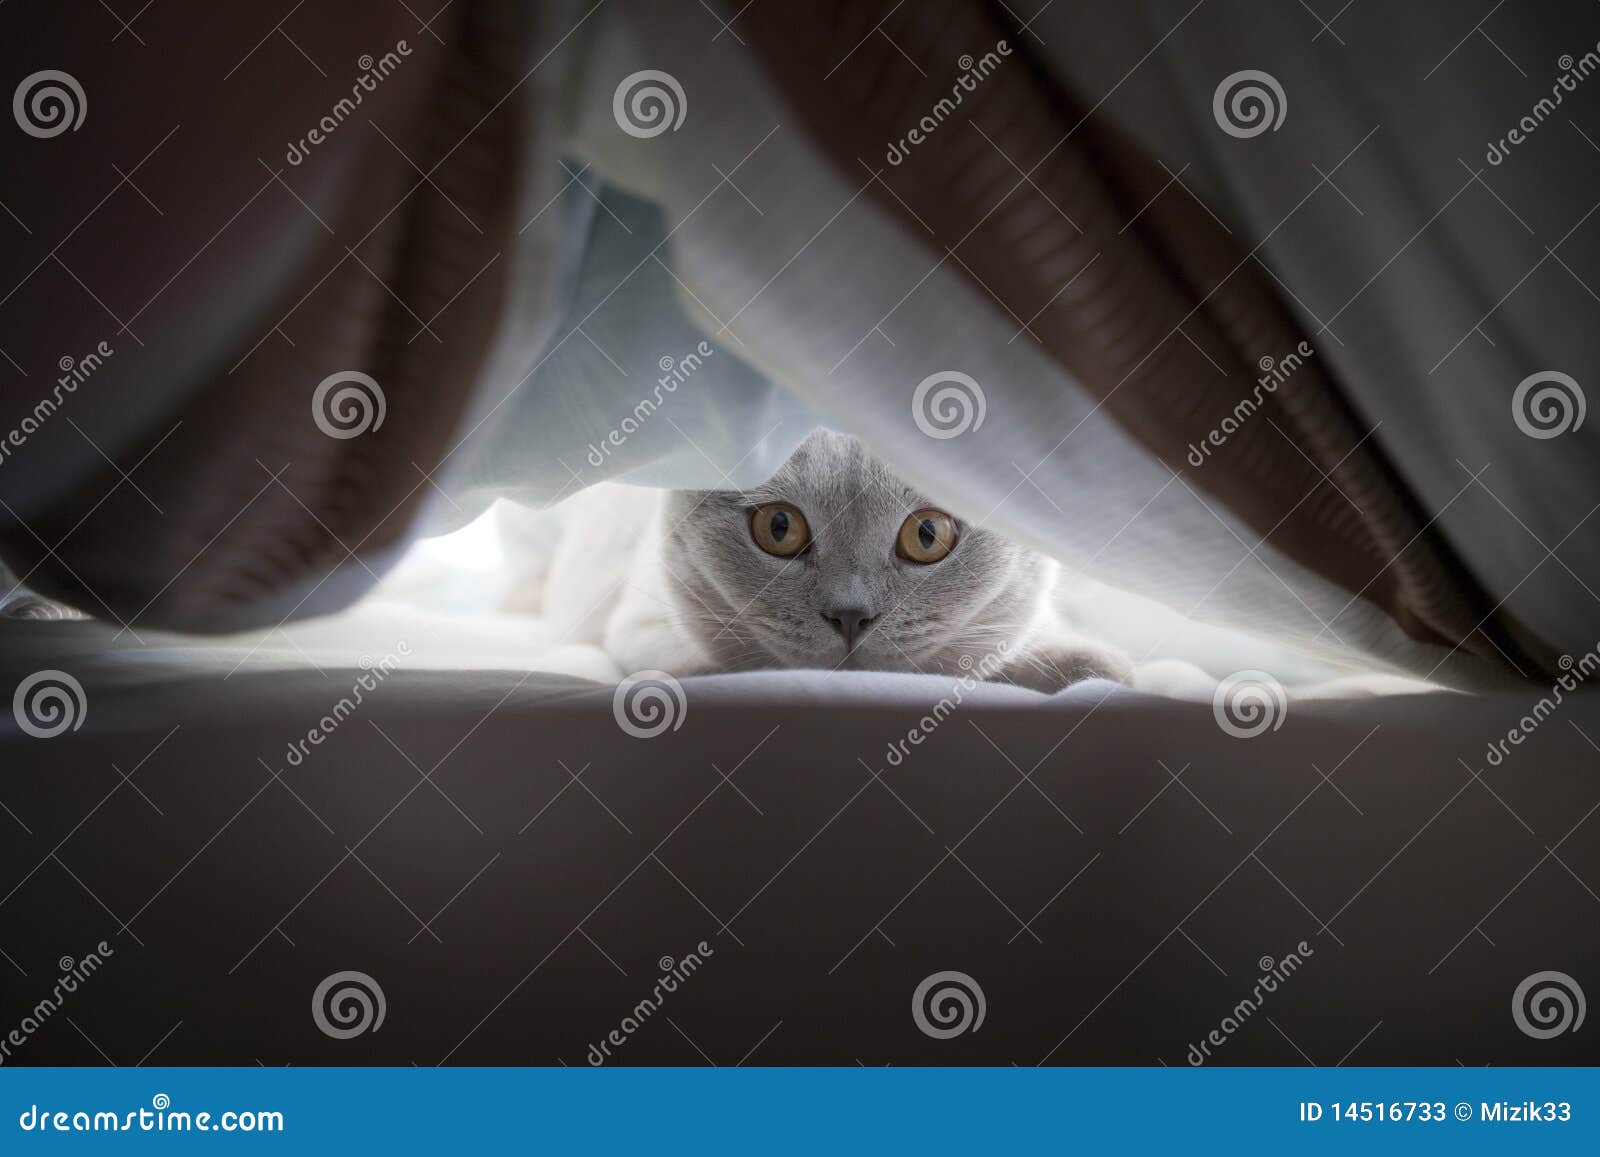 lila brit cat in bed